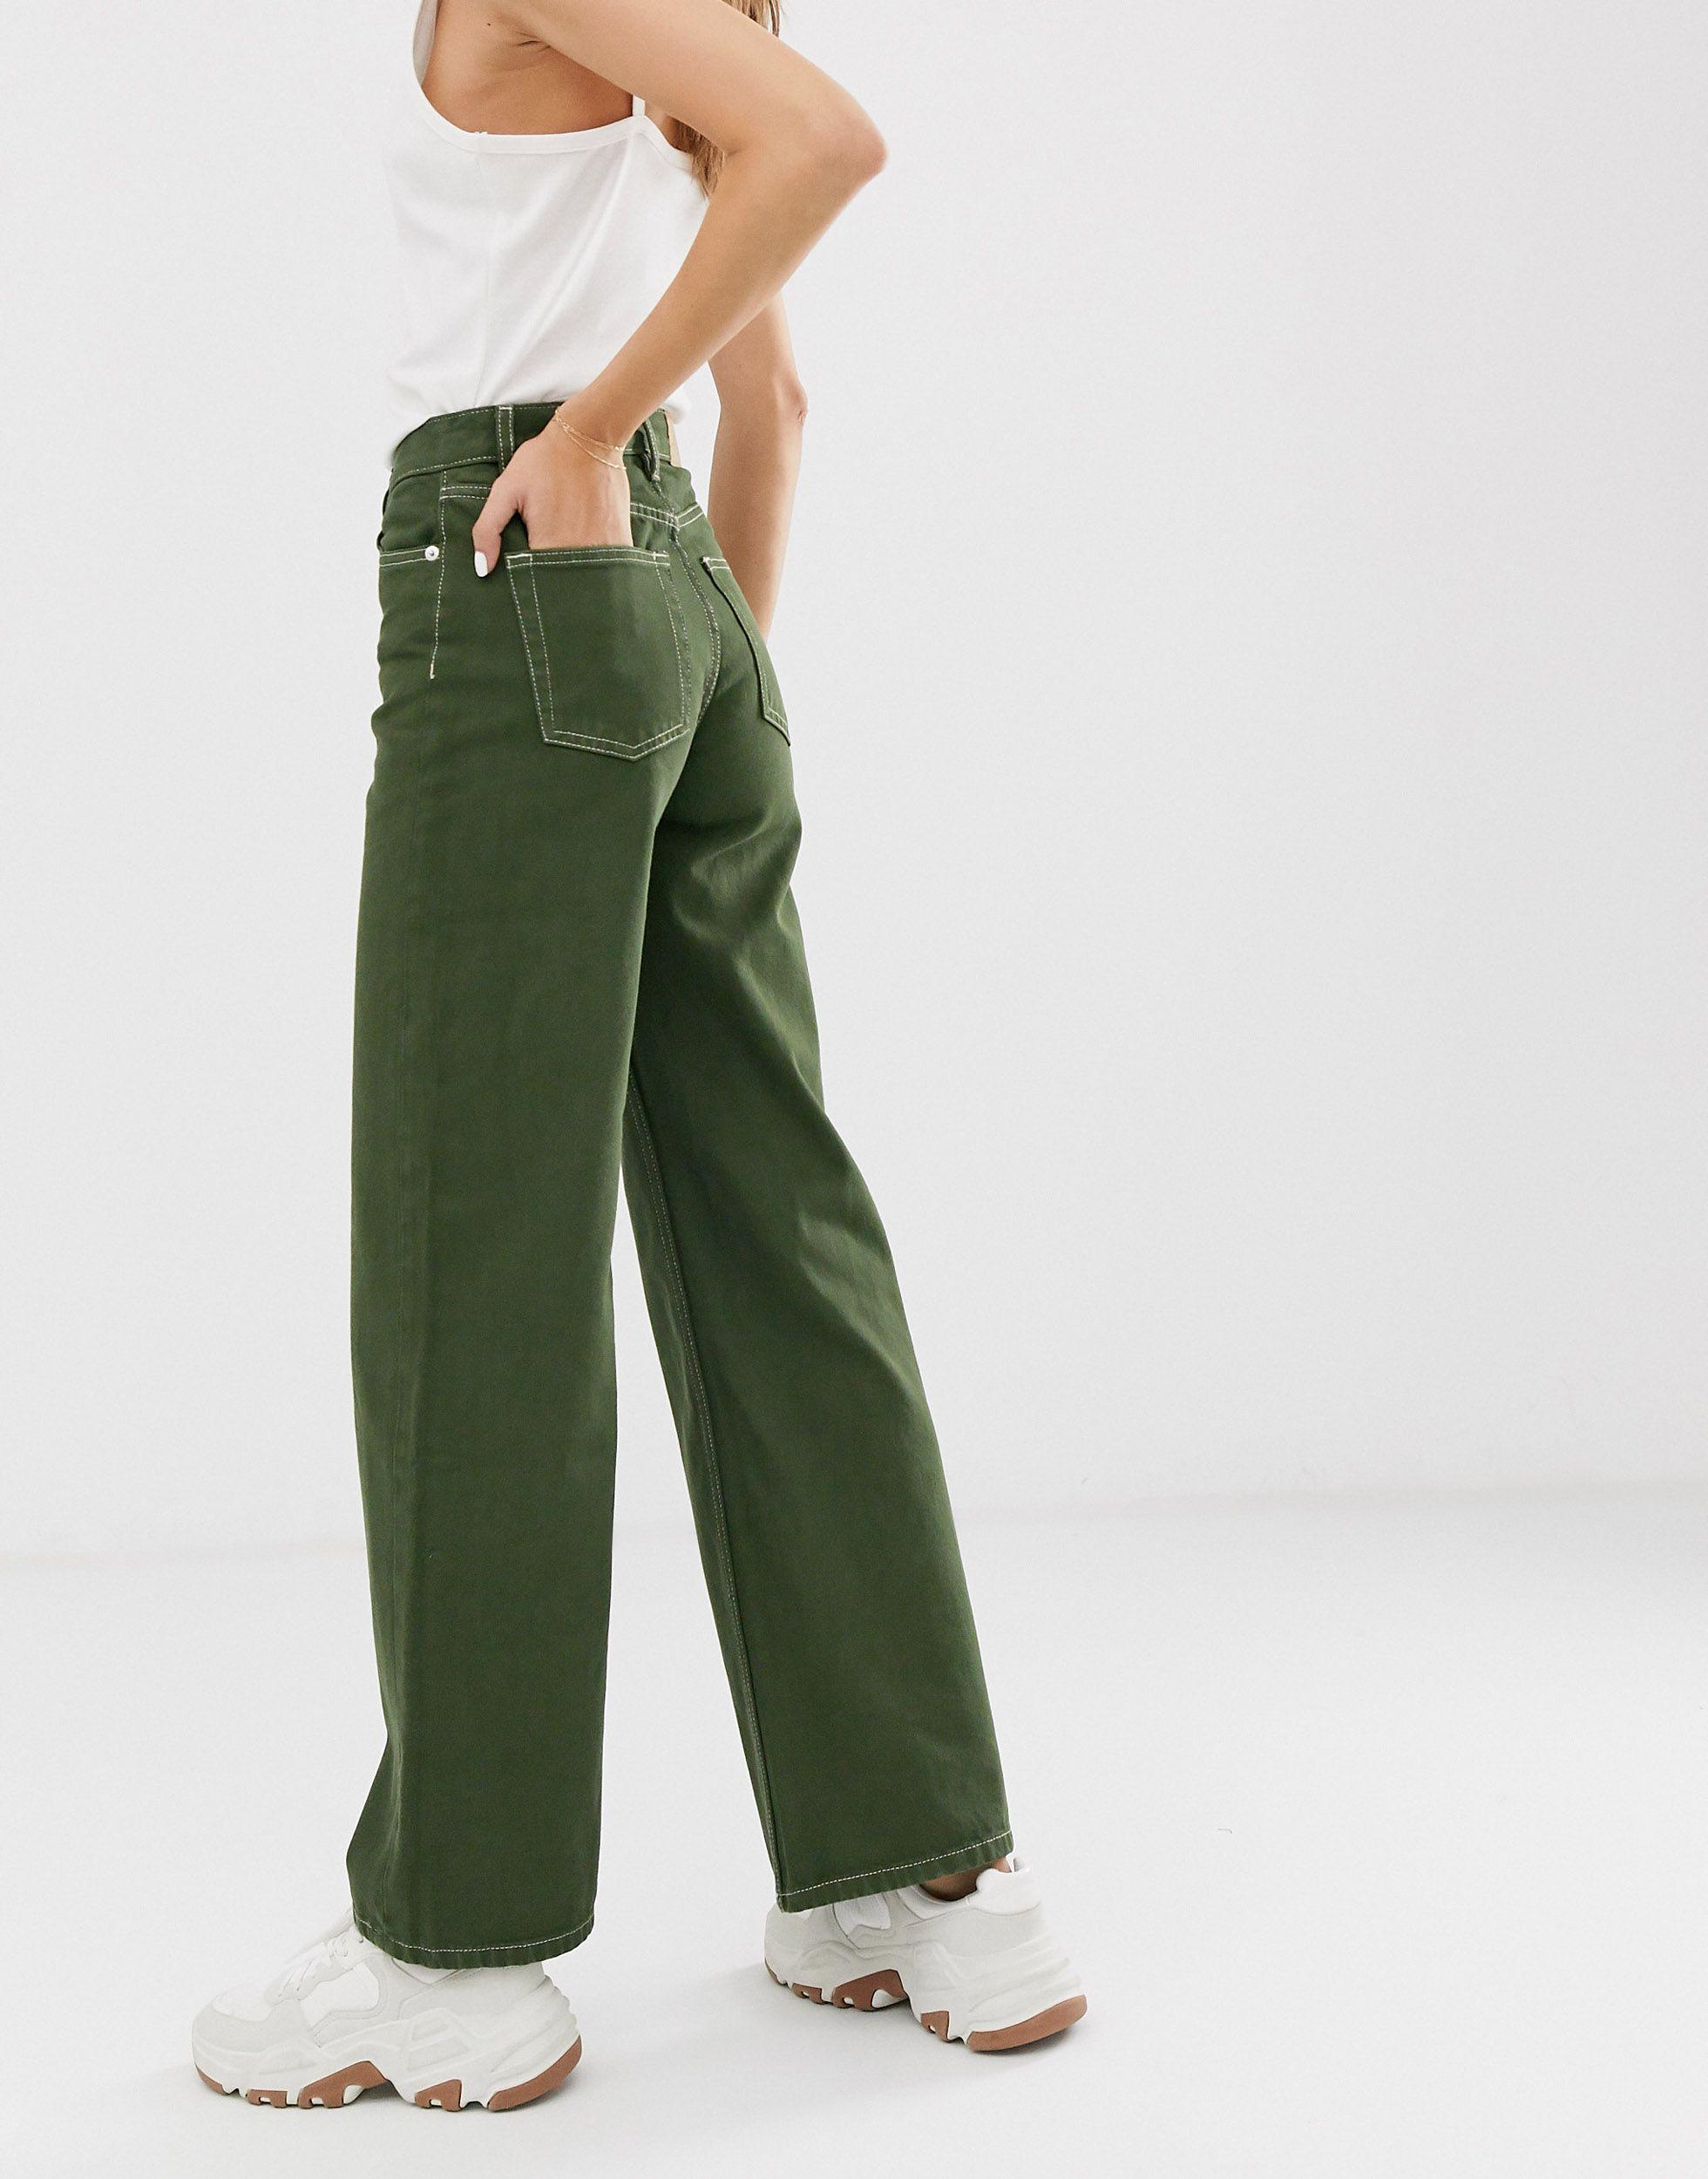 Monki Denim Yoko Wide Leg Jeans With Organic Cotton in Green - Lyst